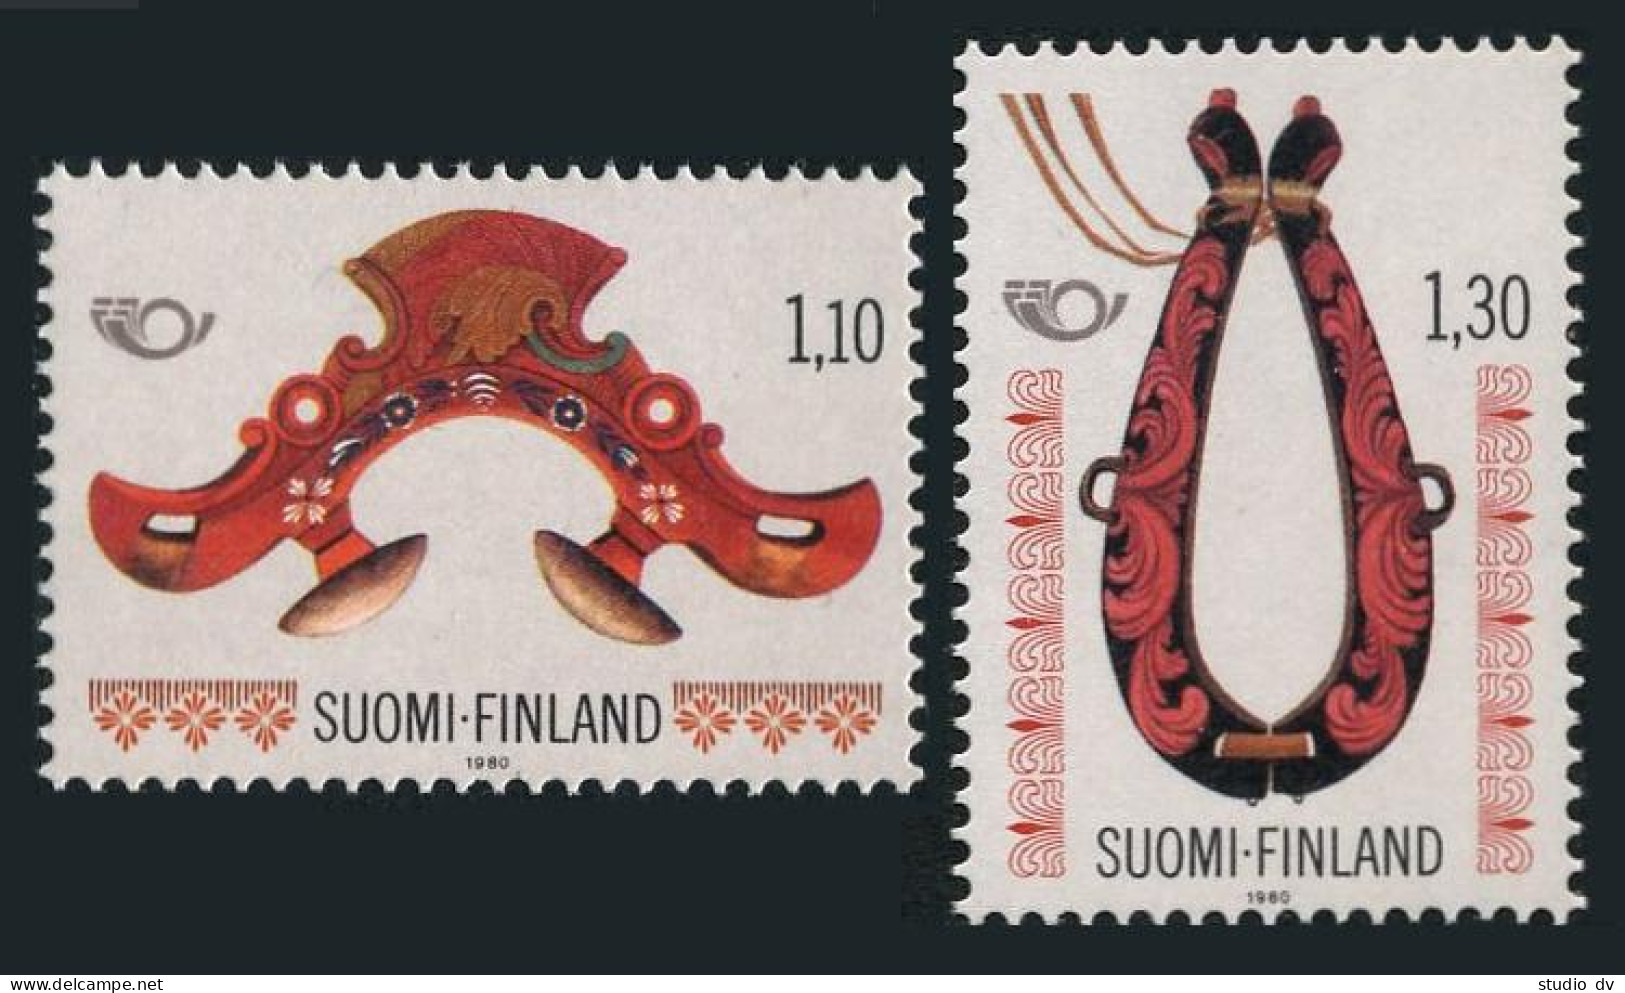 Finland 647-648,MNH.Michel 871-872. Nordic Cooperation,1980.Harness. - Nuevos